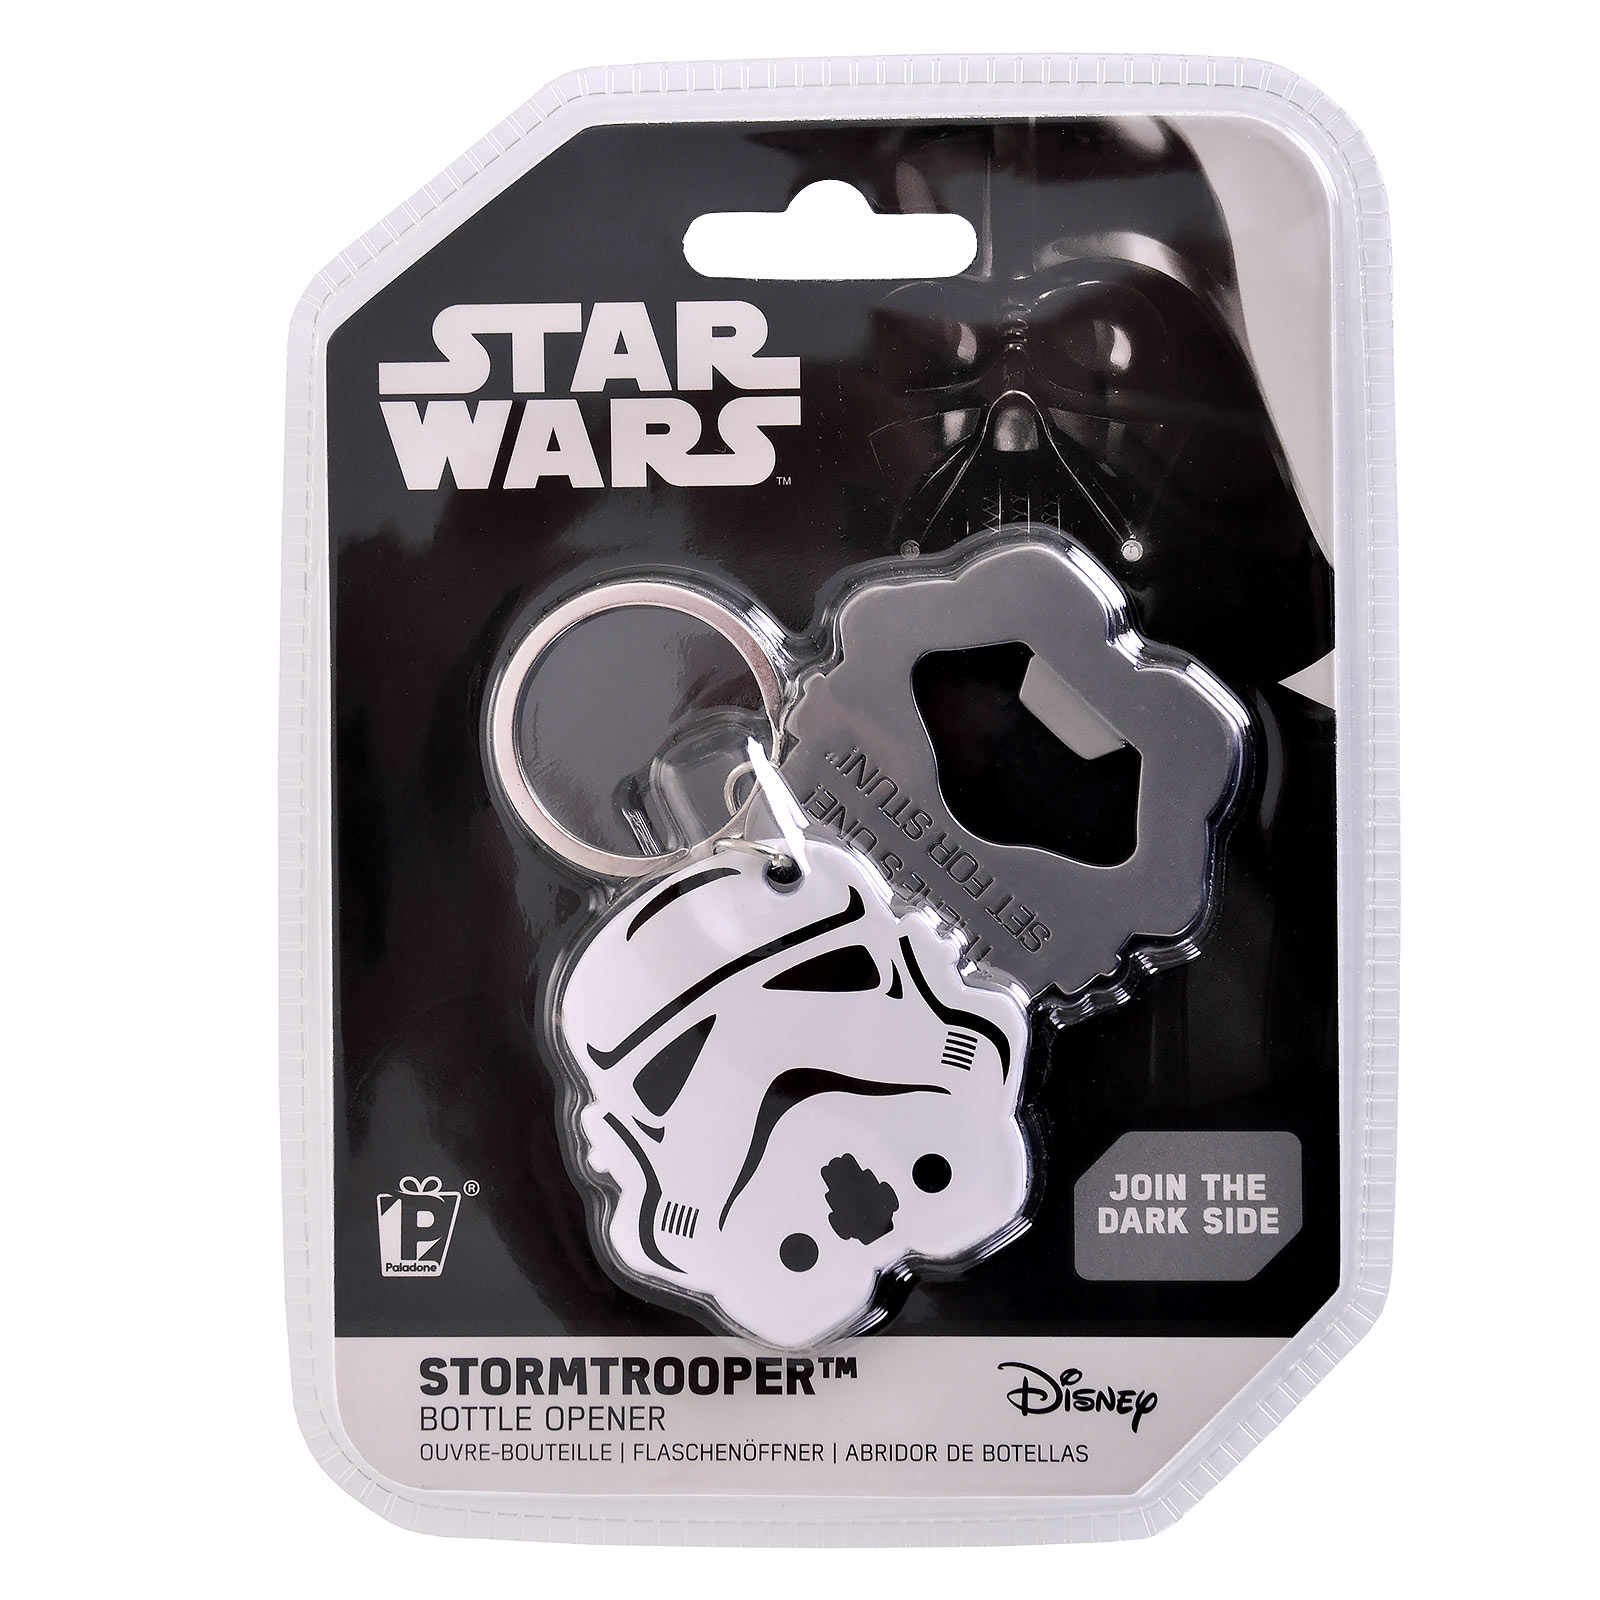 Star Wars - Stormtrooper bottle opener